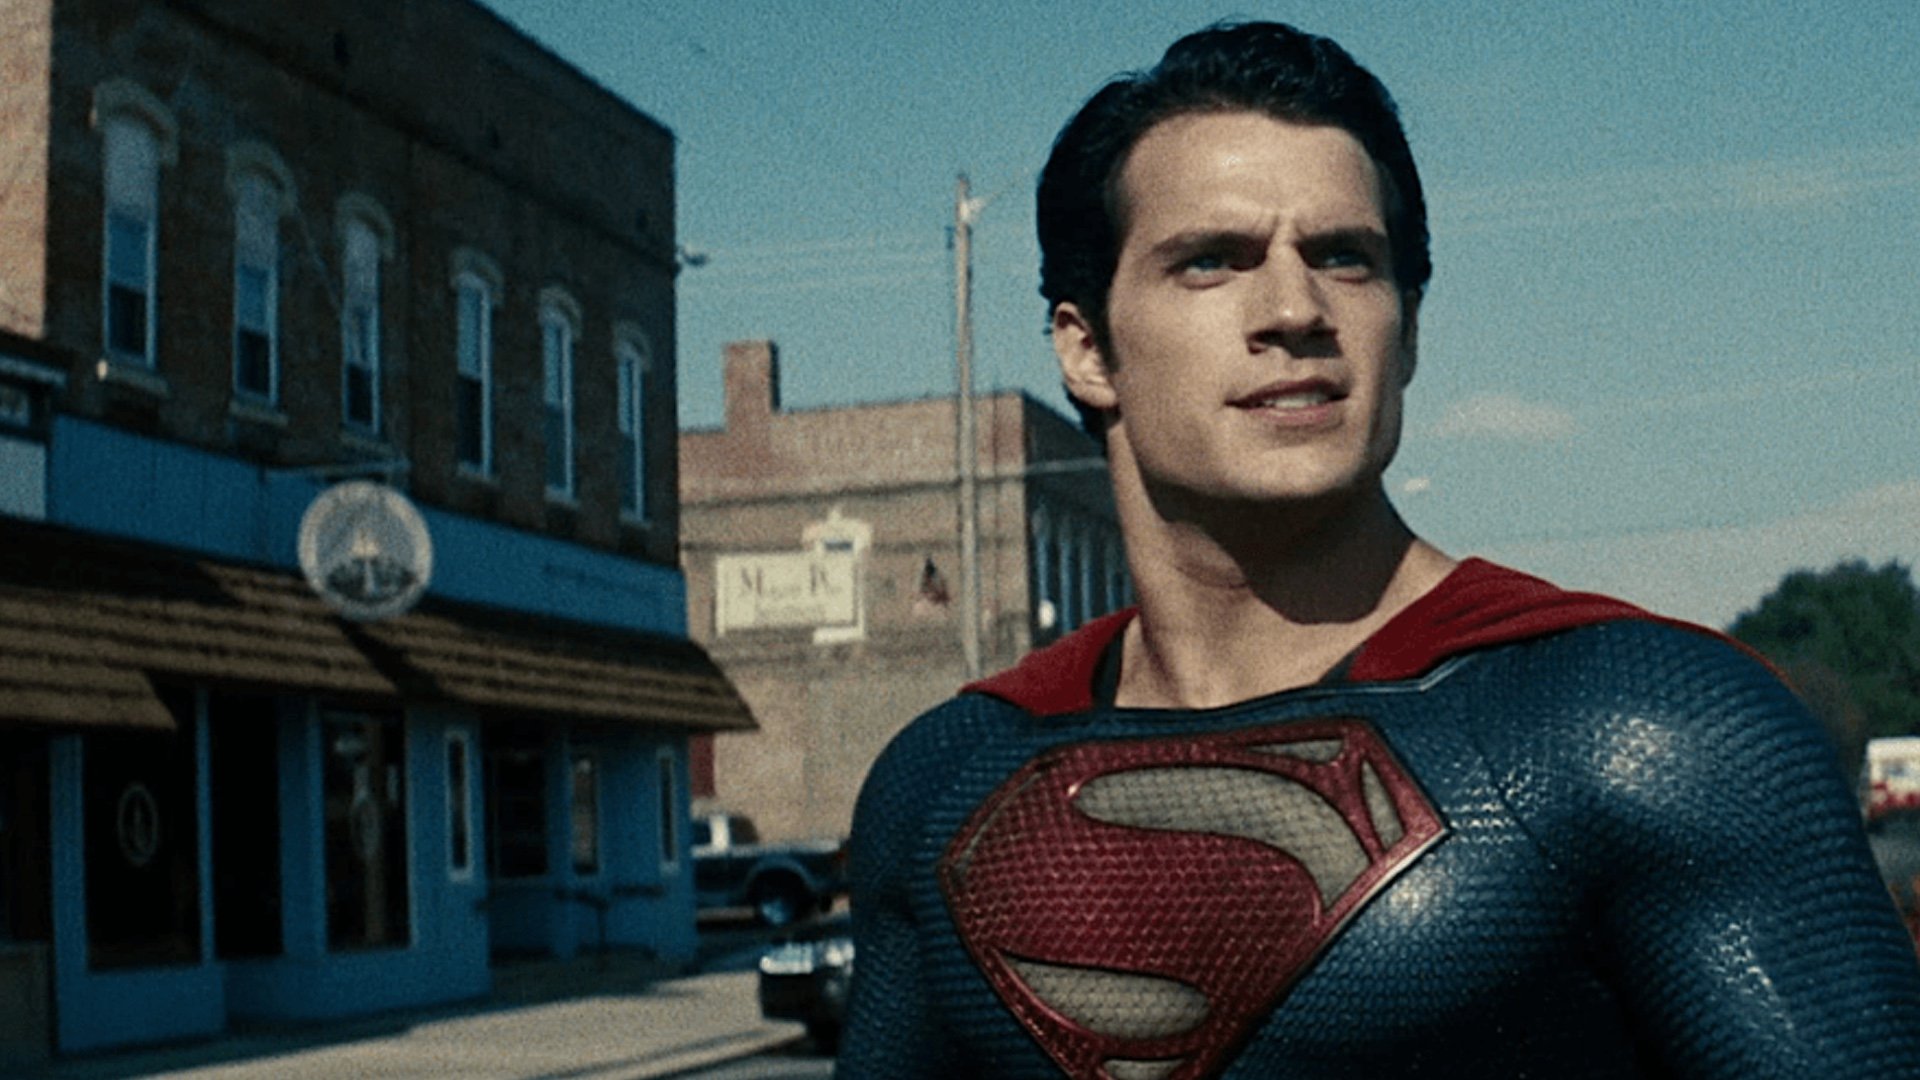 Movie Review: 'Man of Steel' — It's Super! Cavill Thrills in Reboot